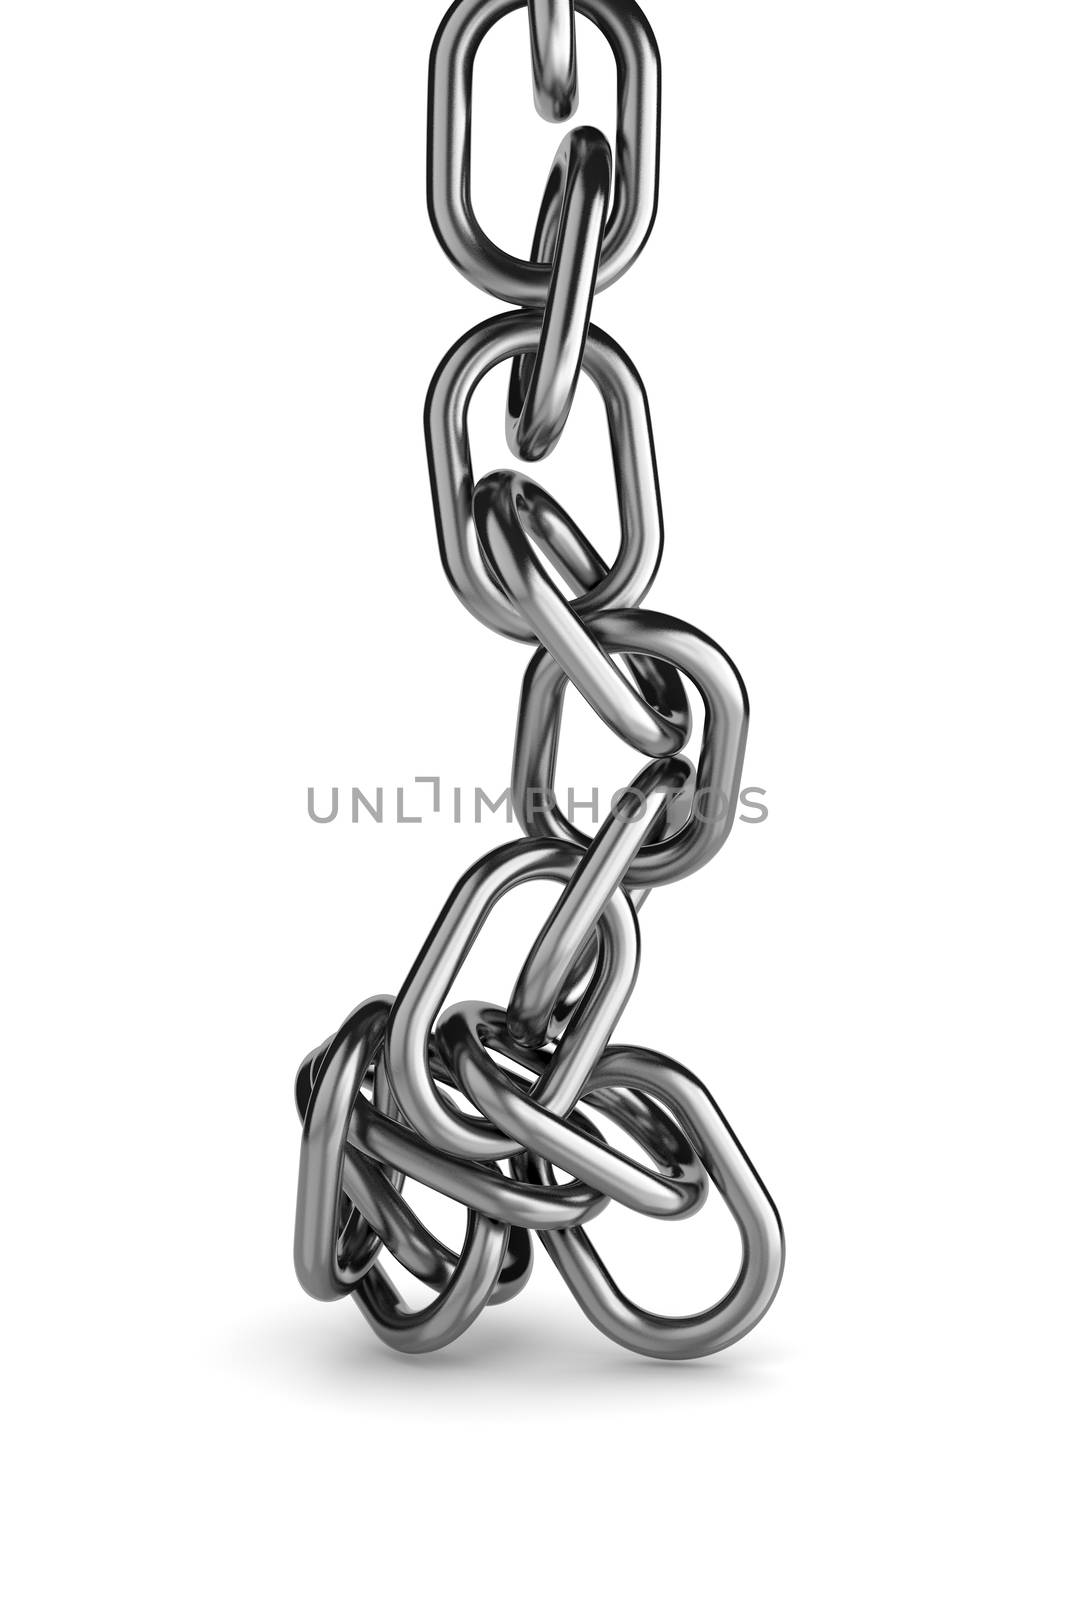 Unbind Metal Chain on White Background 3D Illustration